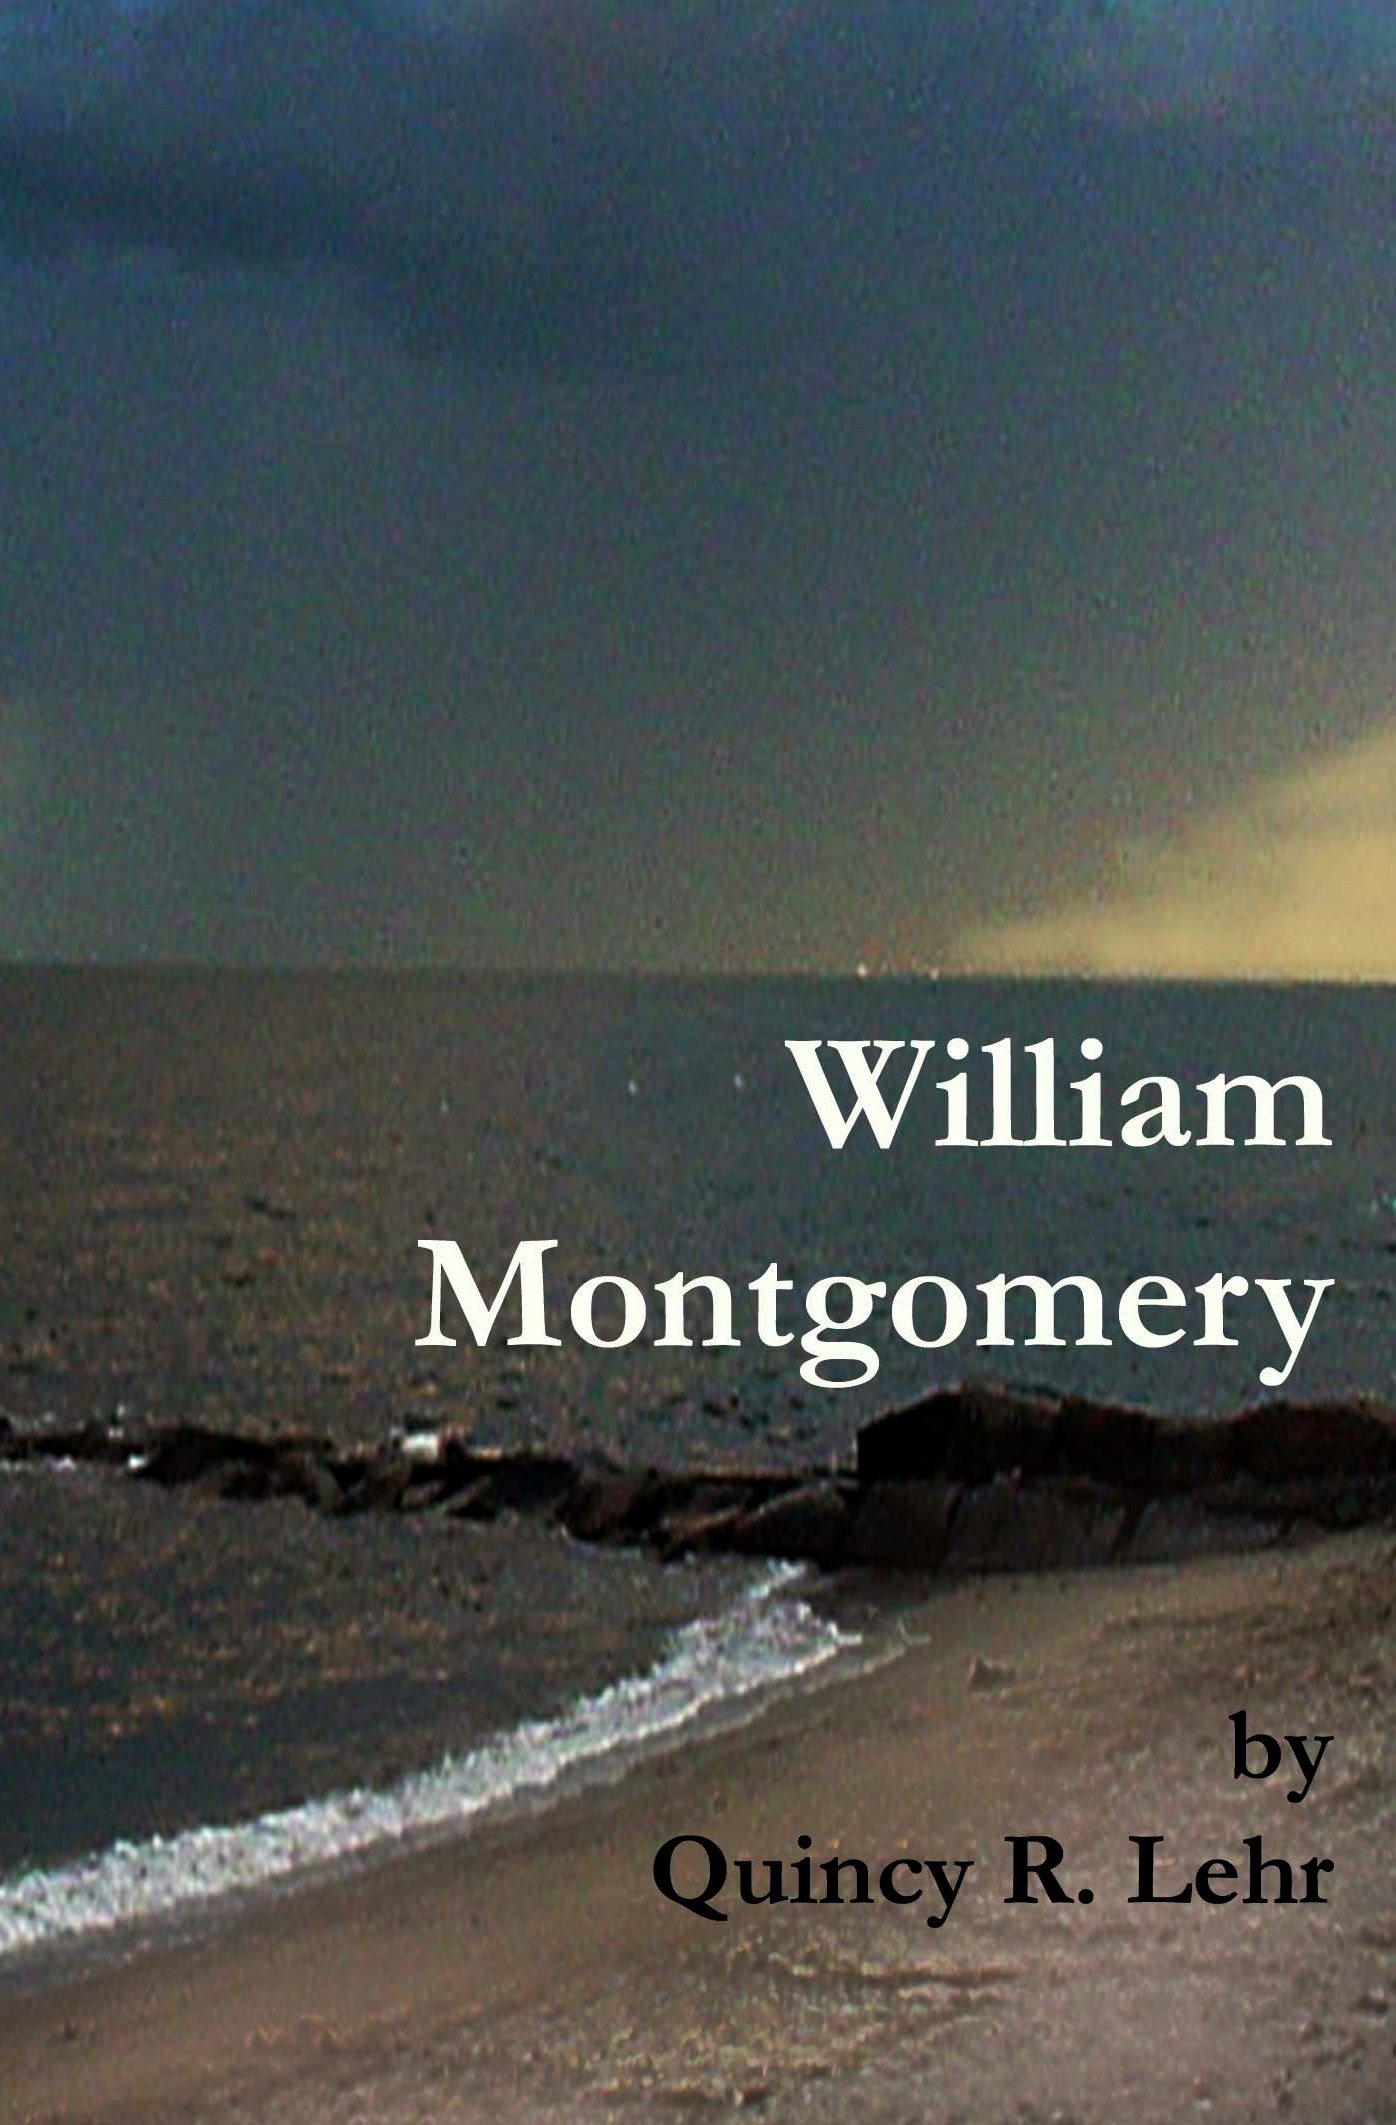 WILLIAM MONTGOMERY by Quincy R. Lehr